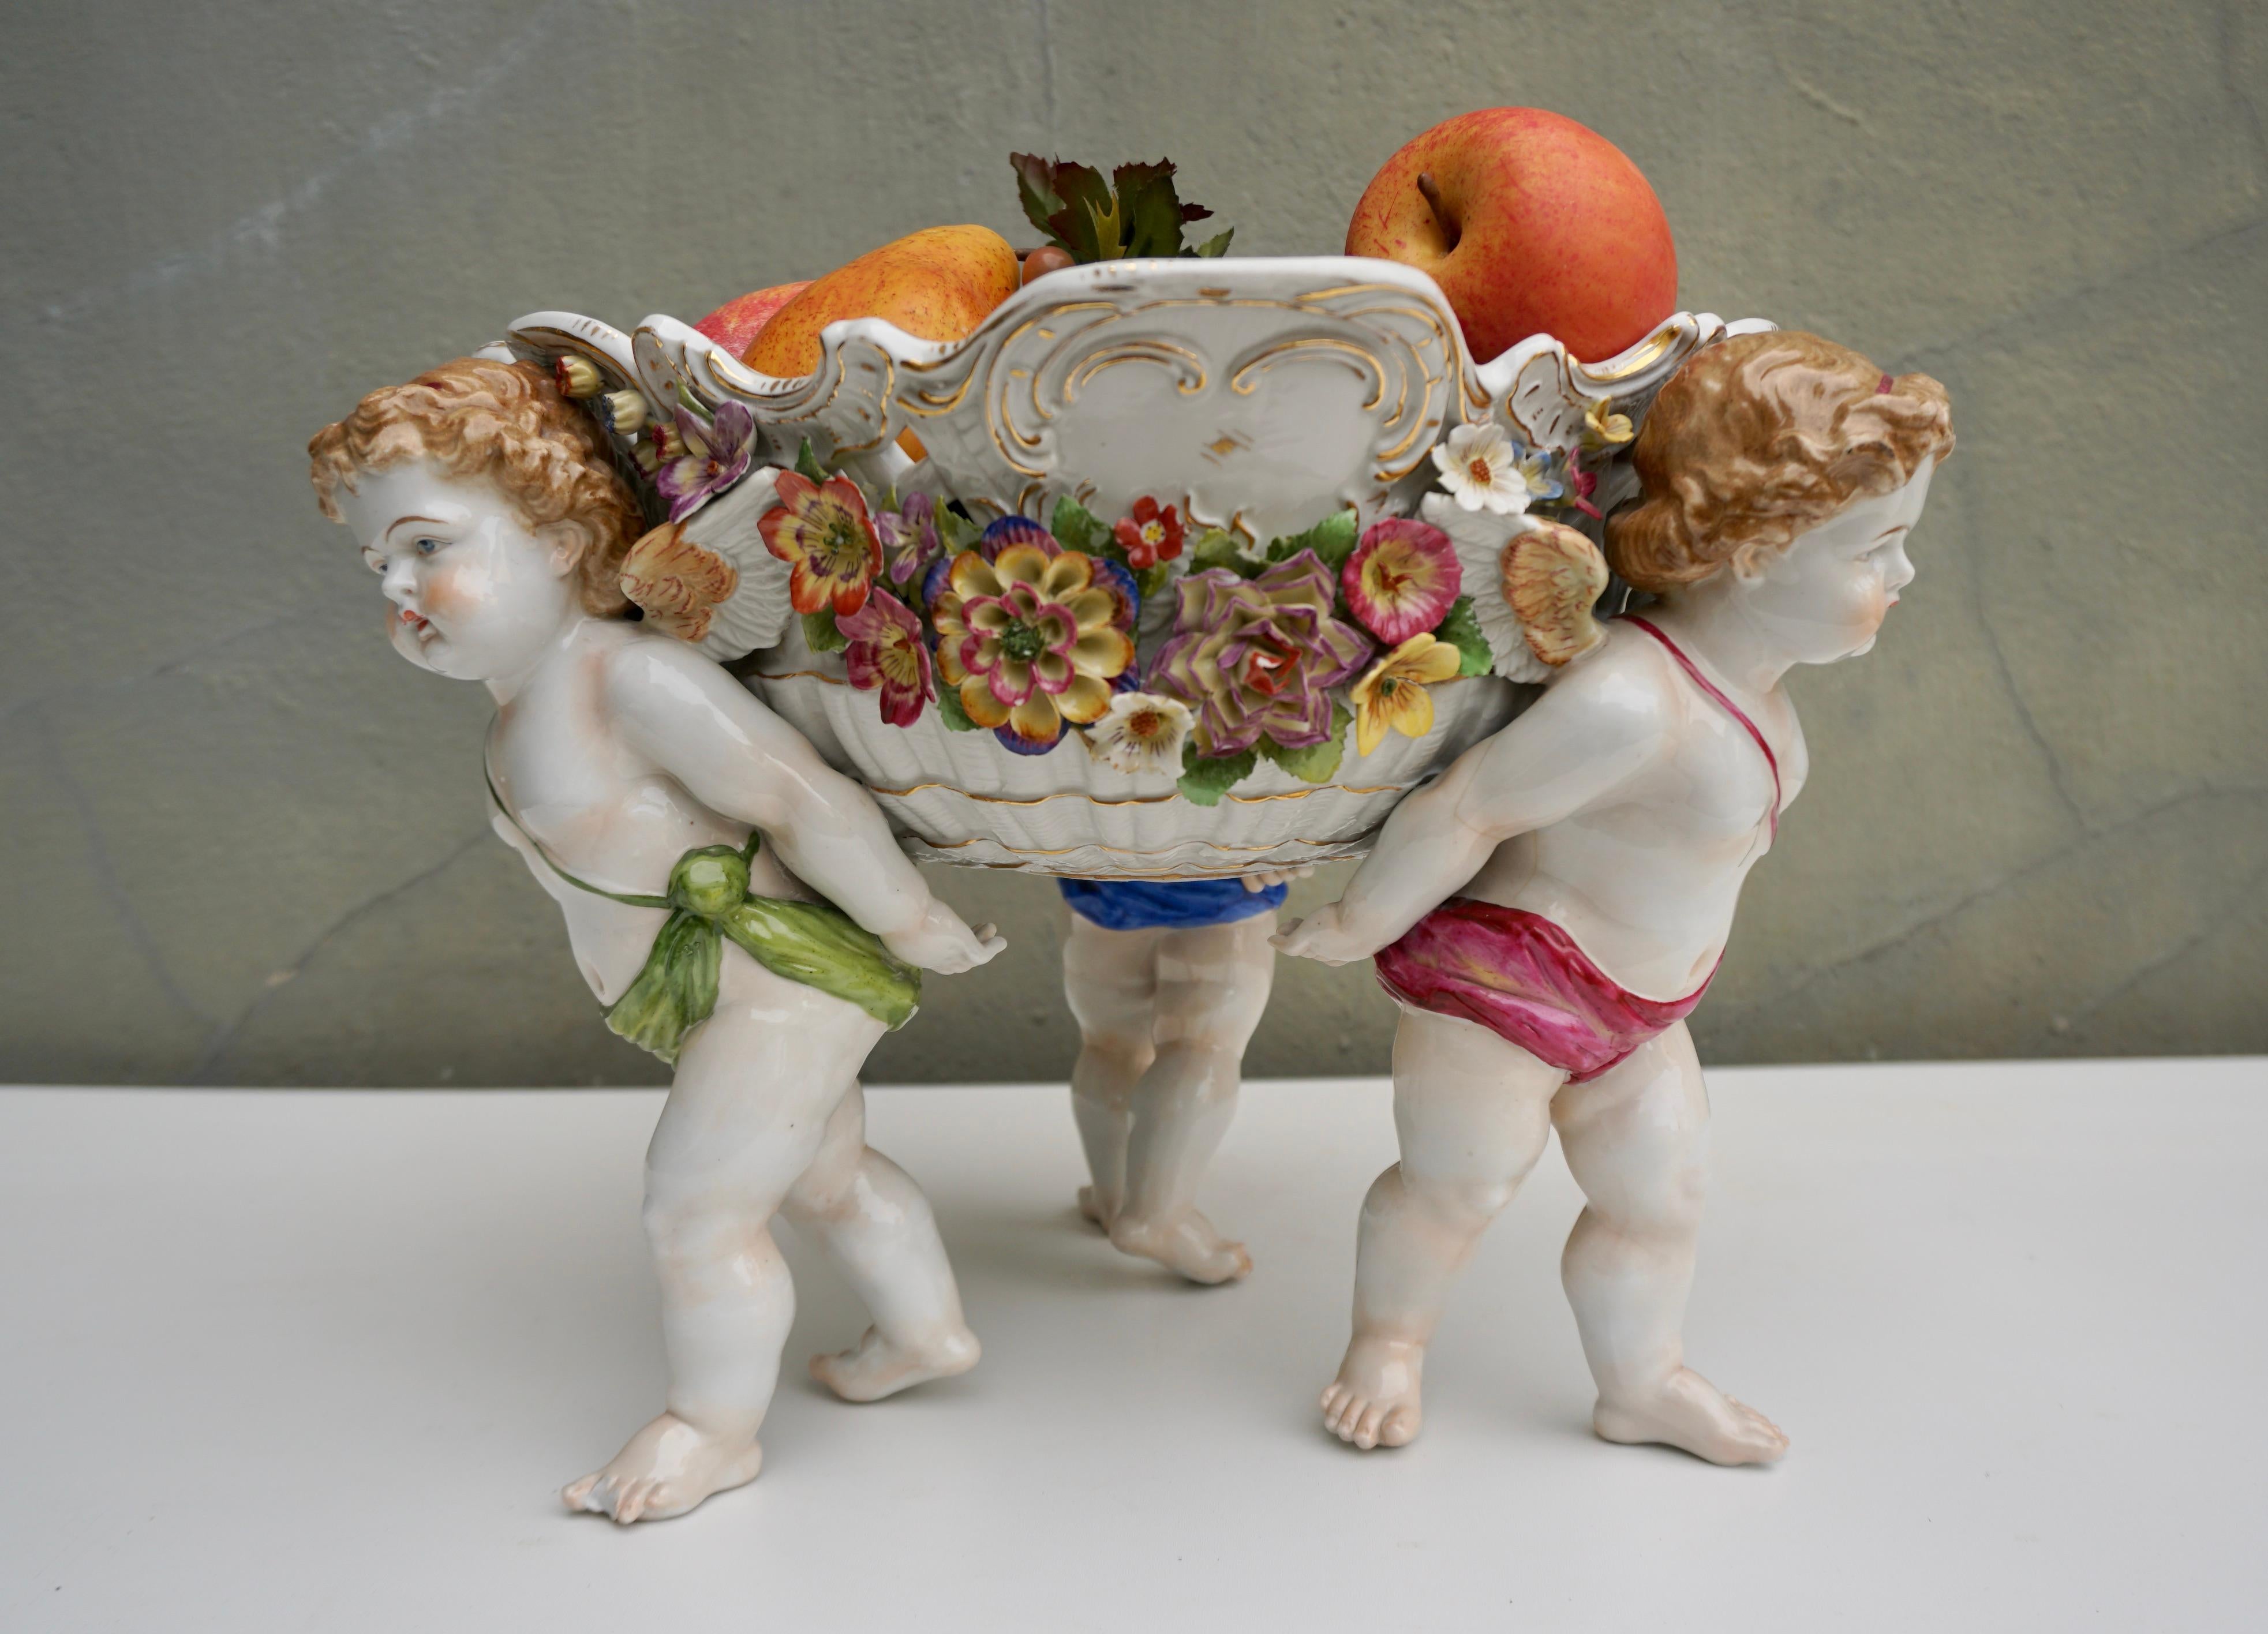 Hollywood Regency 19th Century Viennese Porcelain Figural Cherub Jardinière or Centrepiece Bowl For Sale